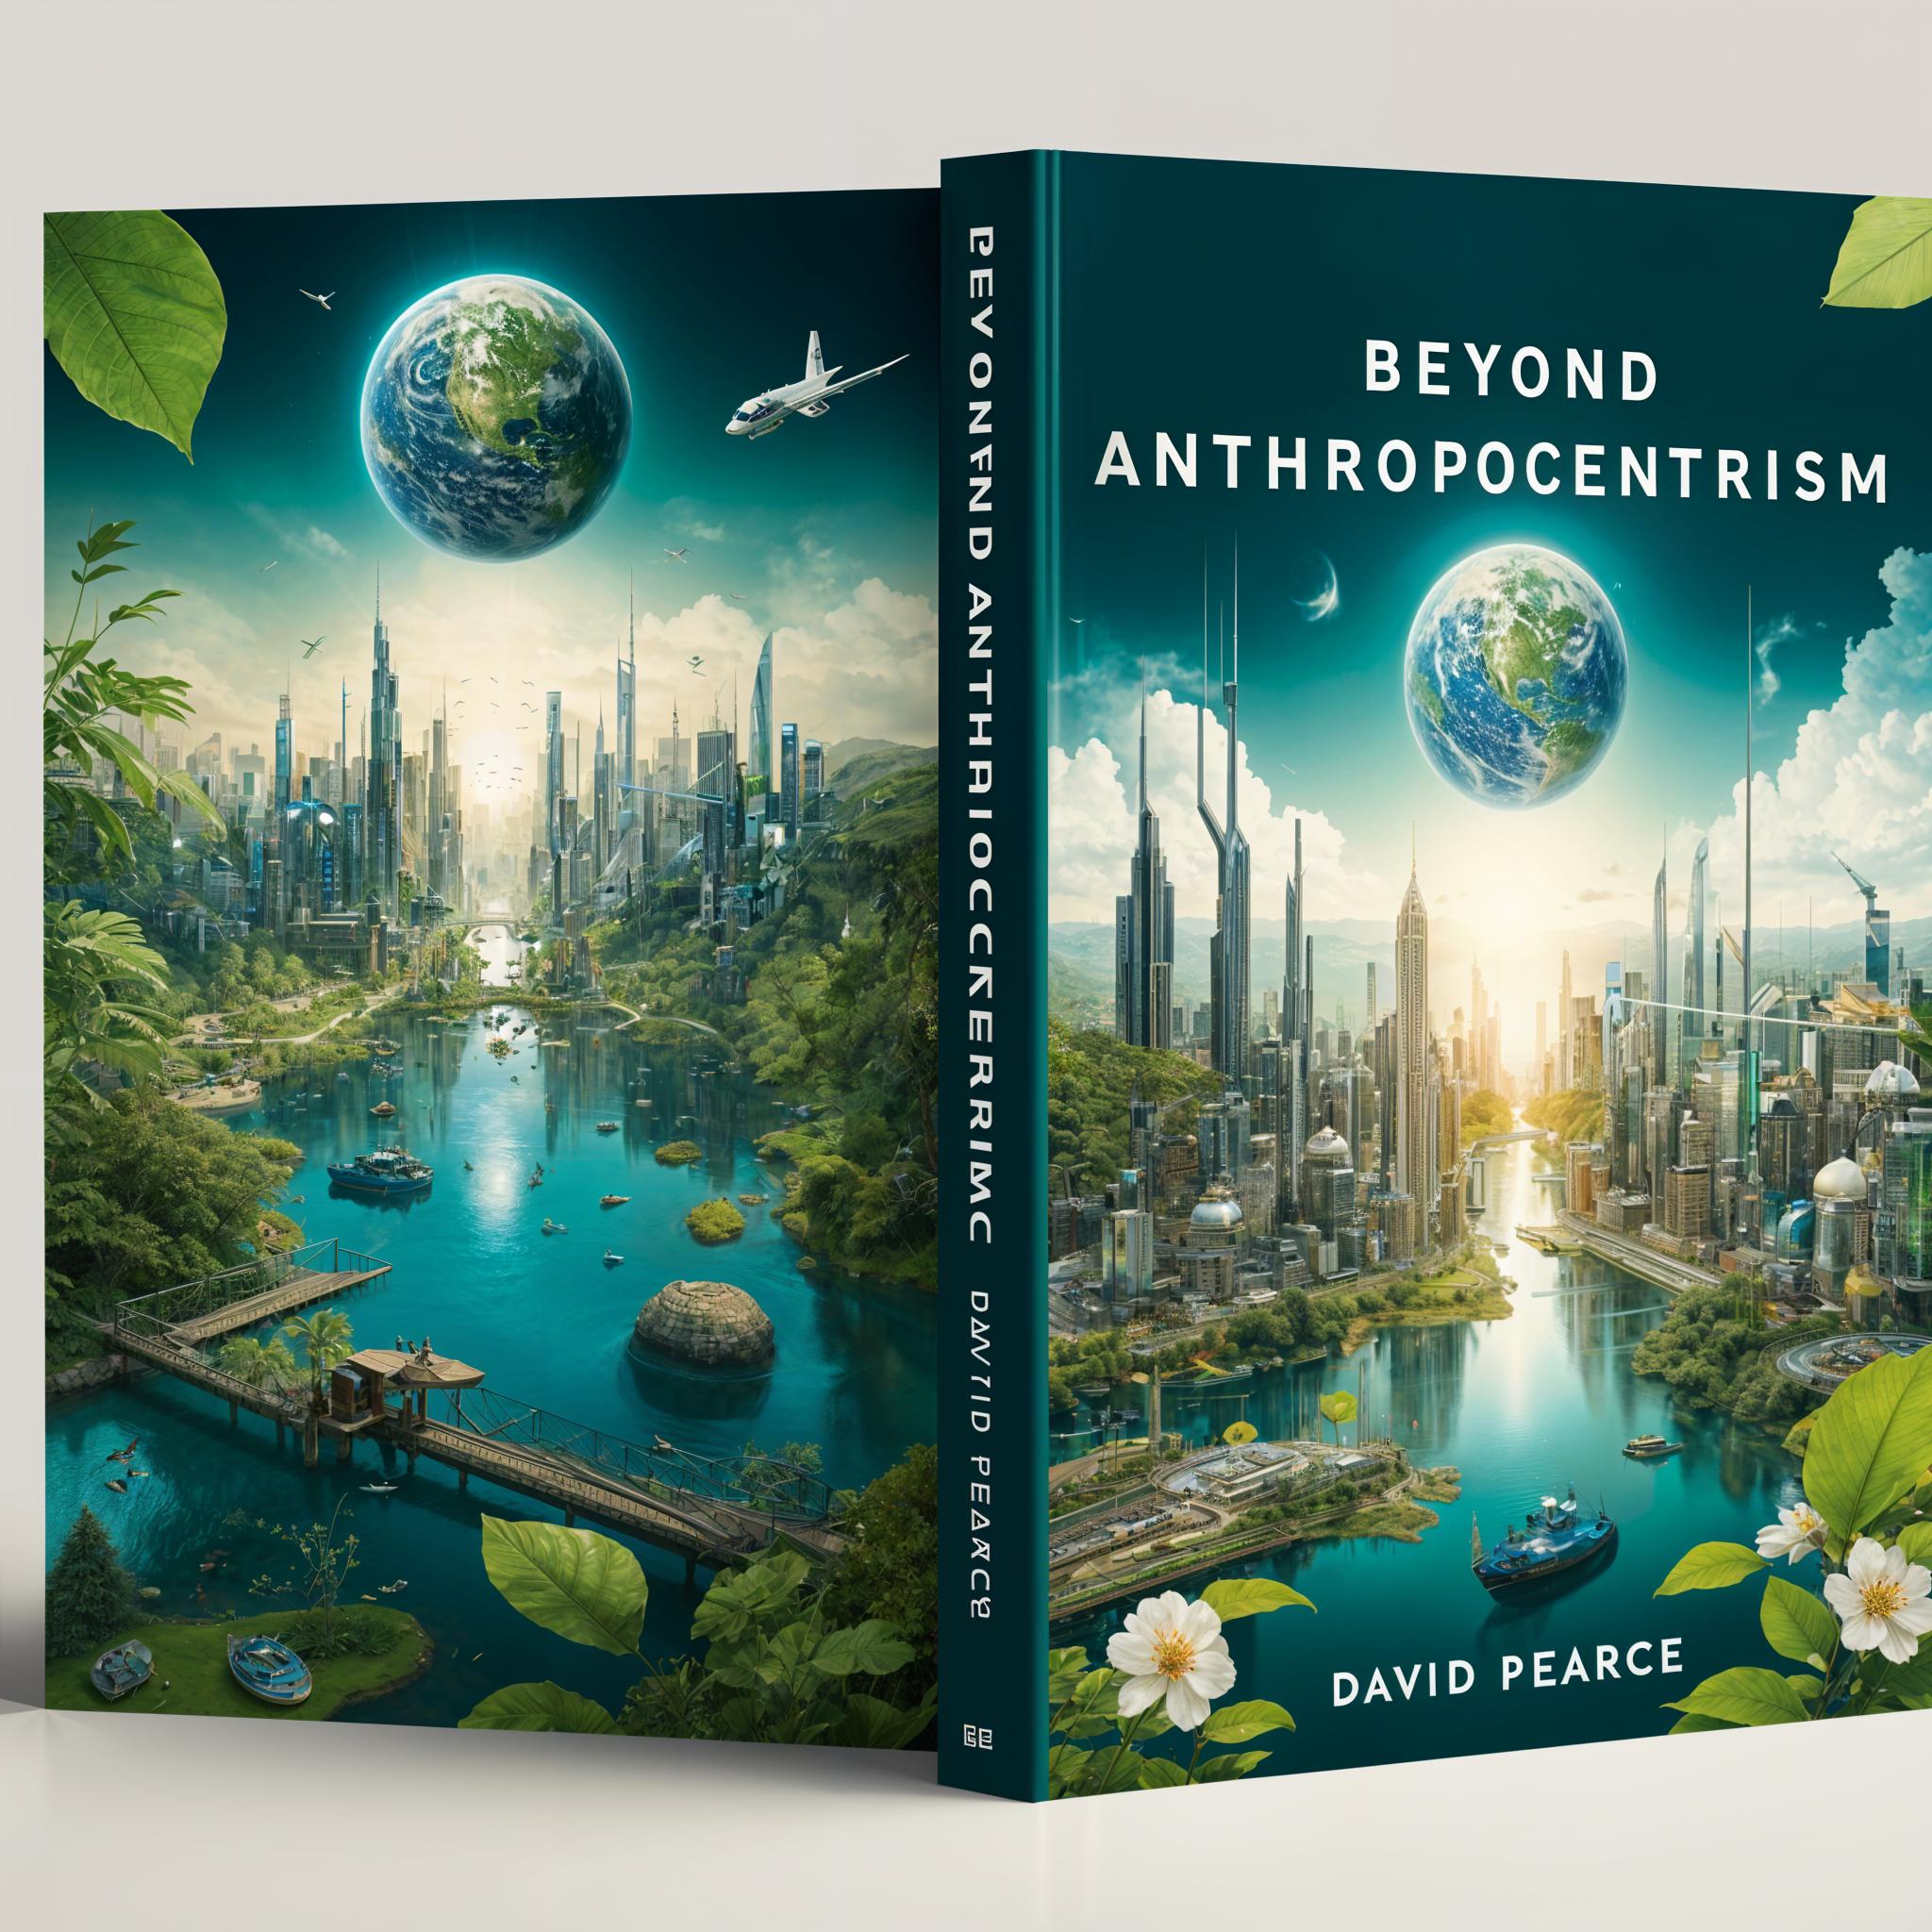 Beyond Anthropocentrism by David Pearce